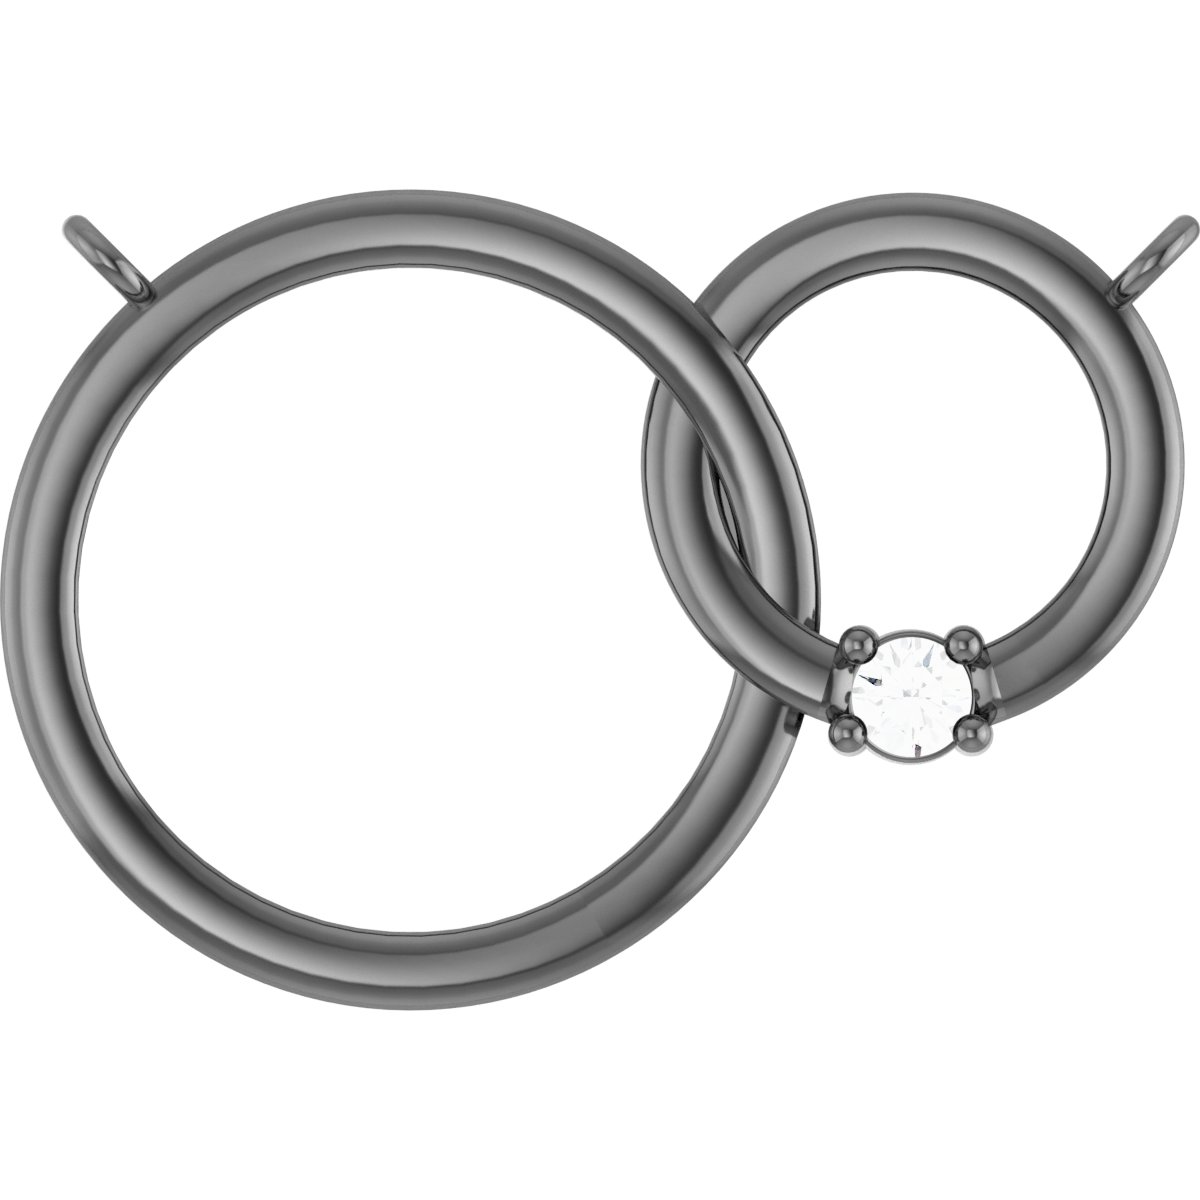 Family Interlocking Circle Necklace or Center